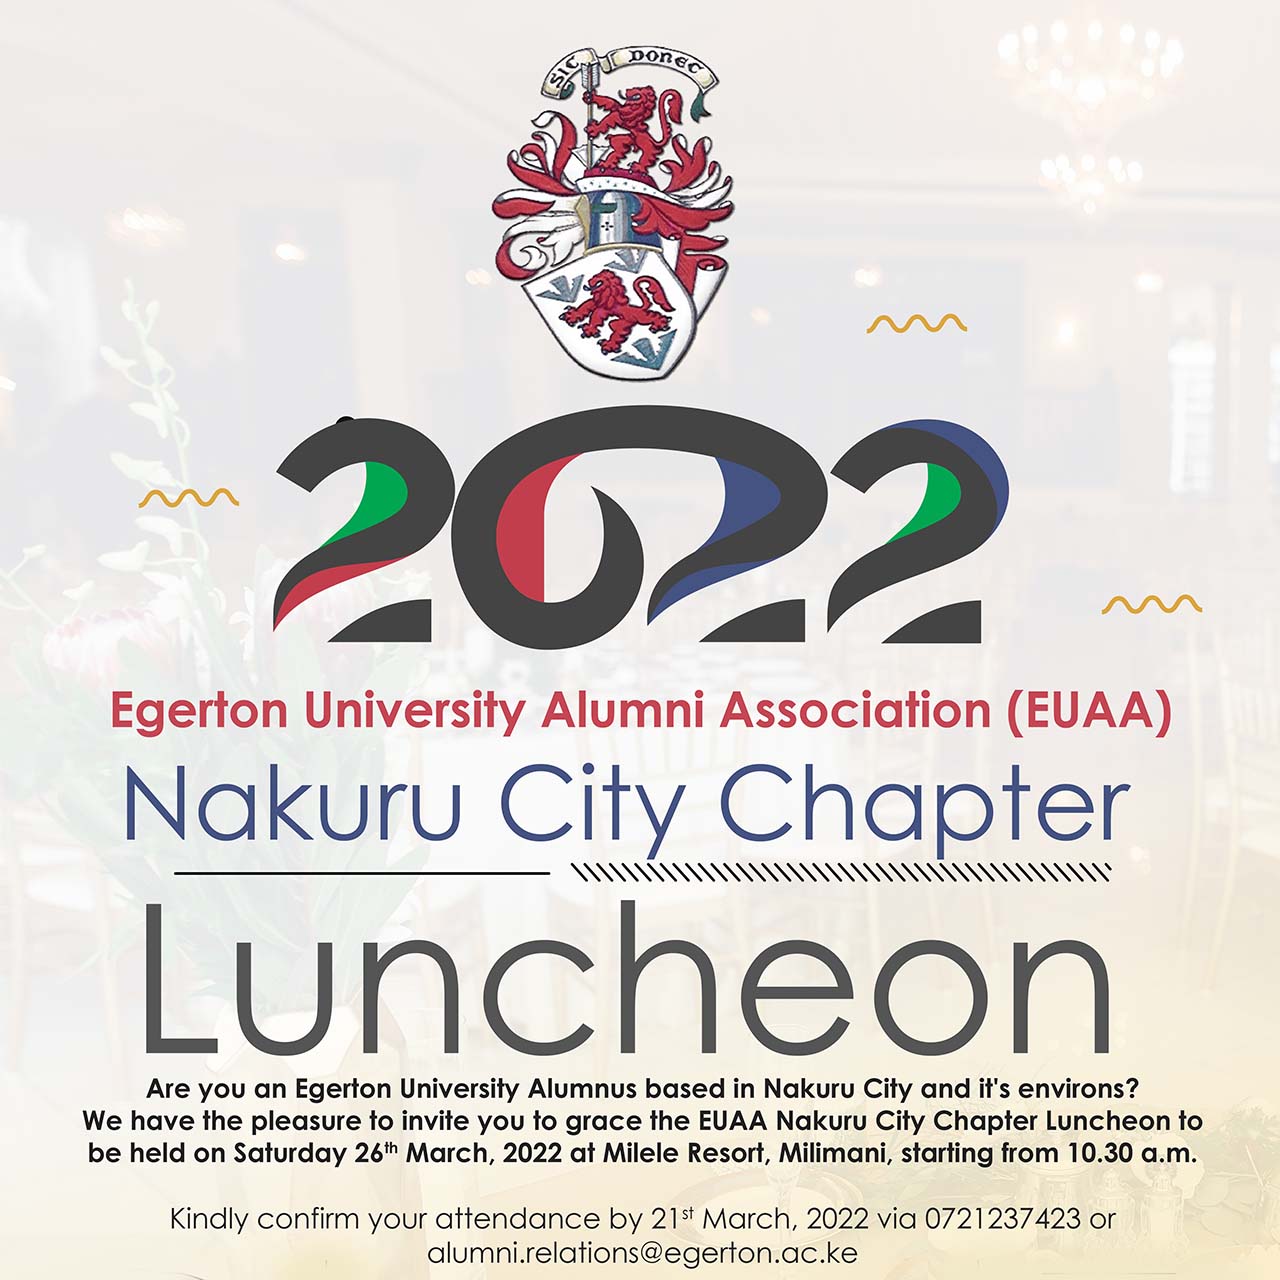 Egerton University Alumni Association (EUAA) Nakuru City Chapter Luncheon